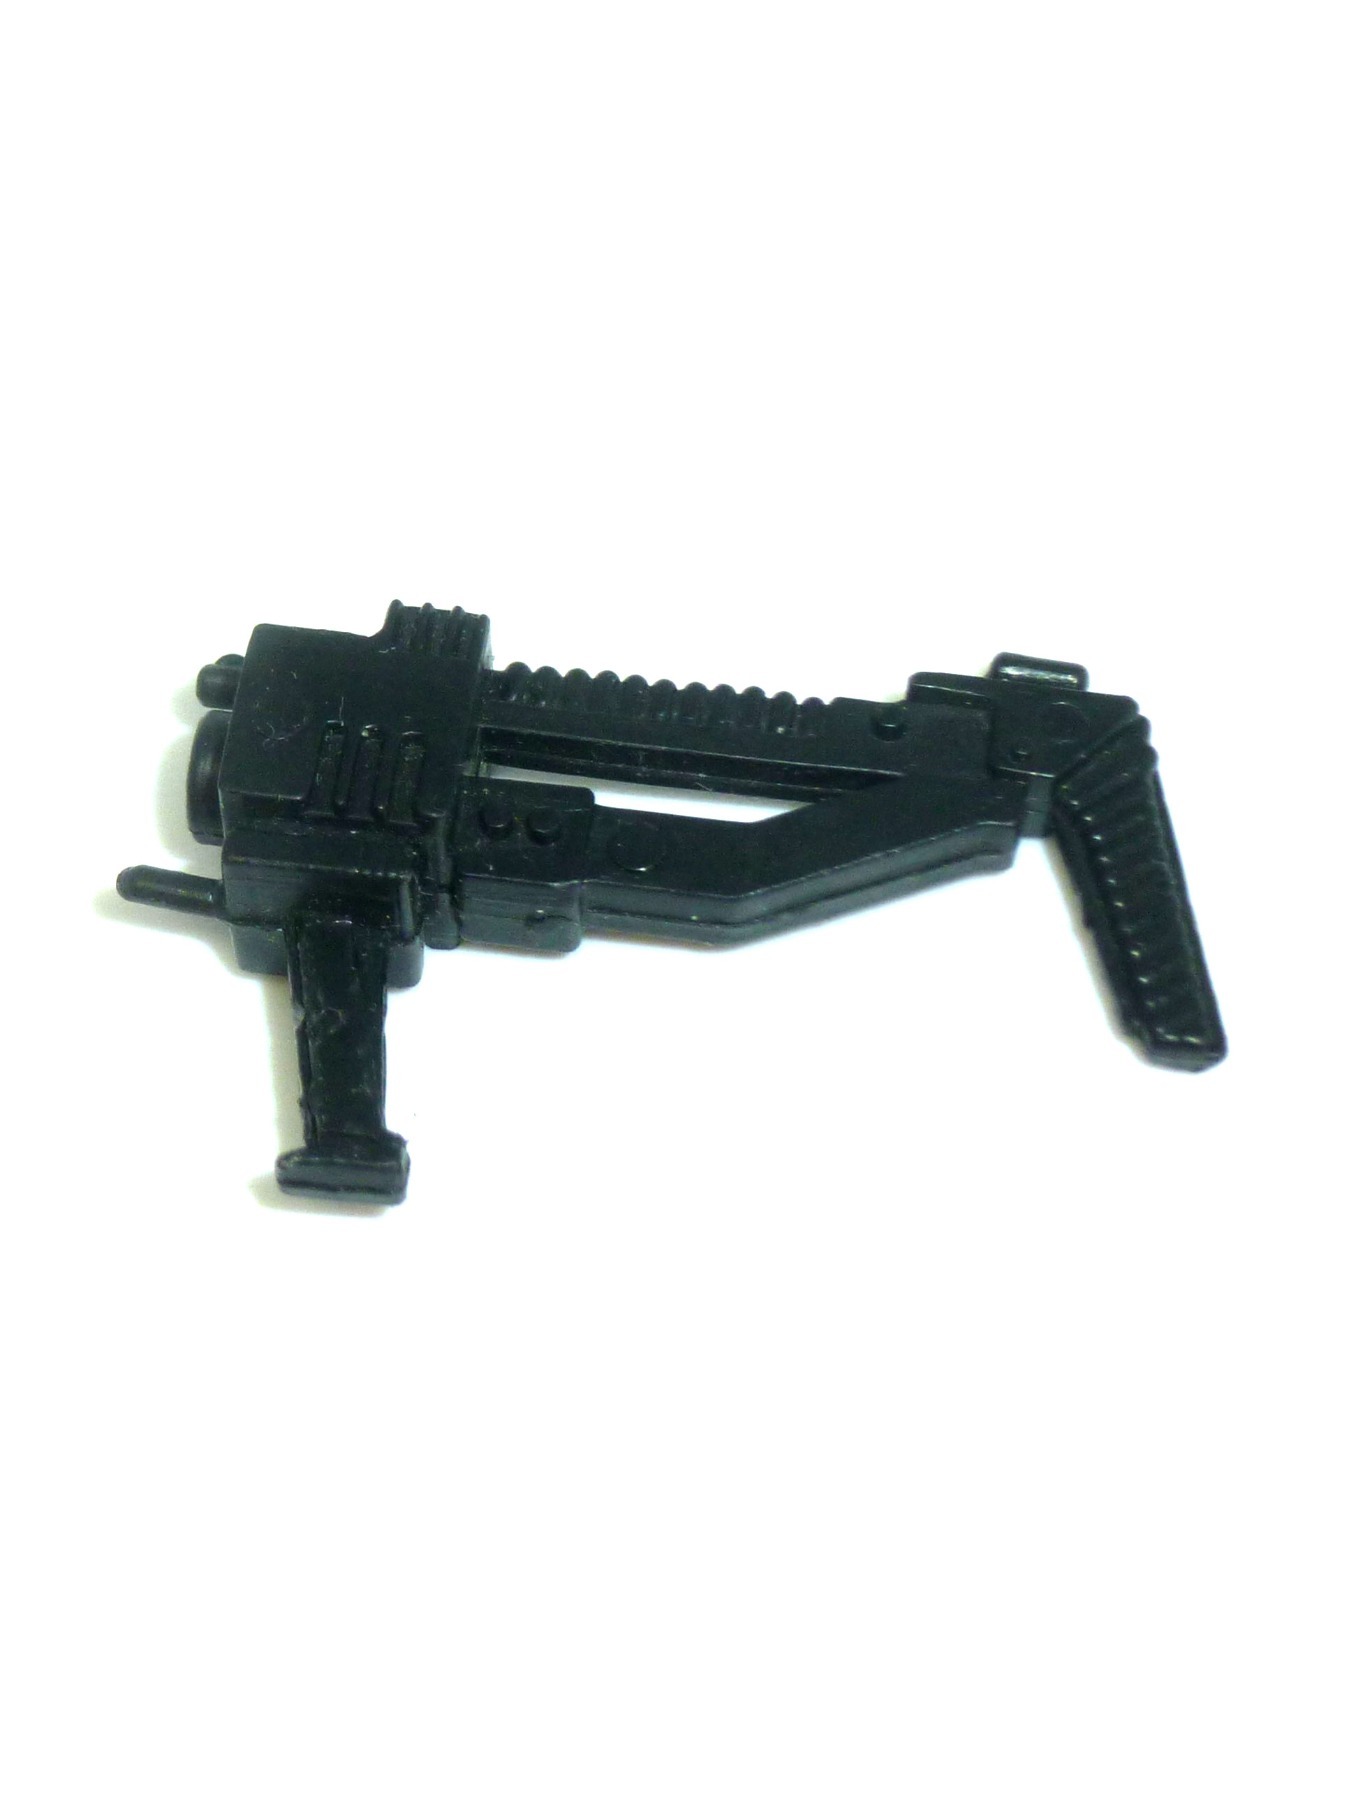 Toxo-Viper Weapon / Black Gun Hasbro 1988